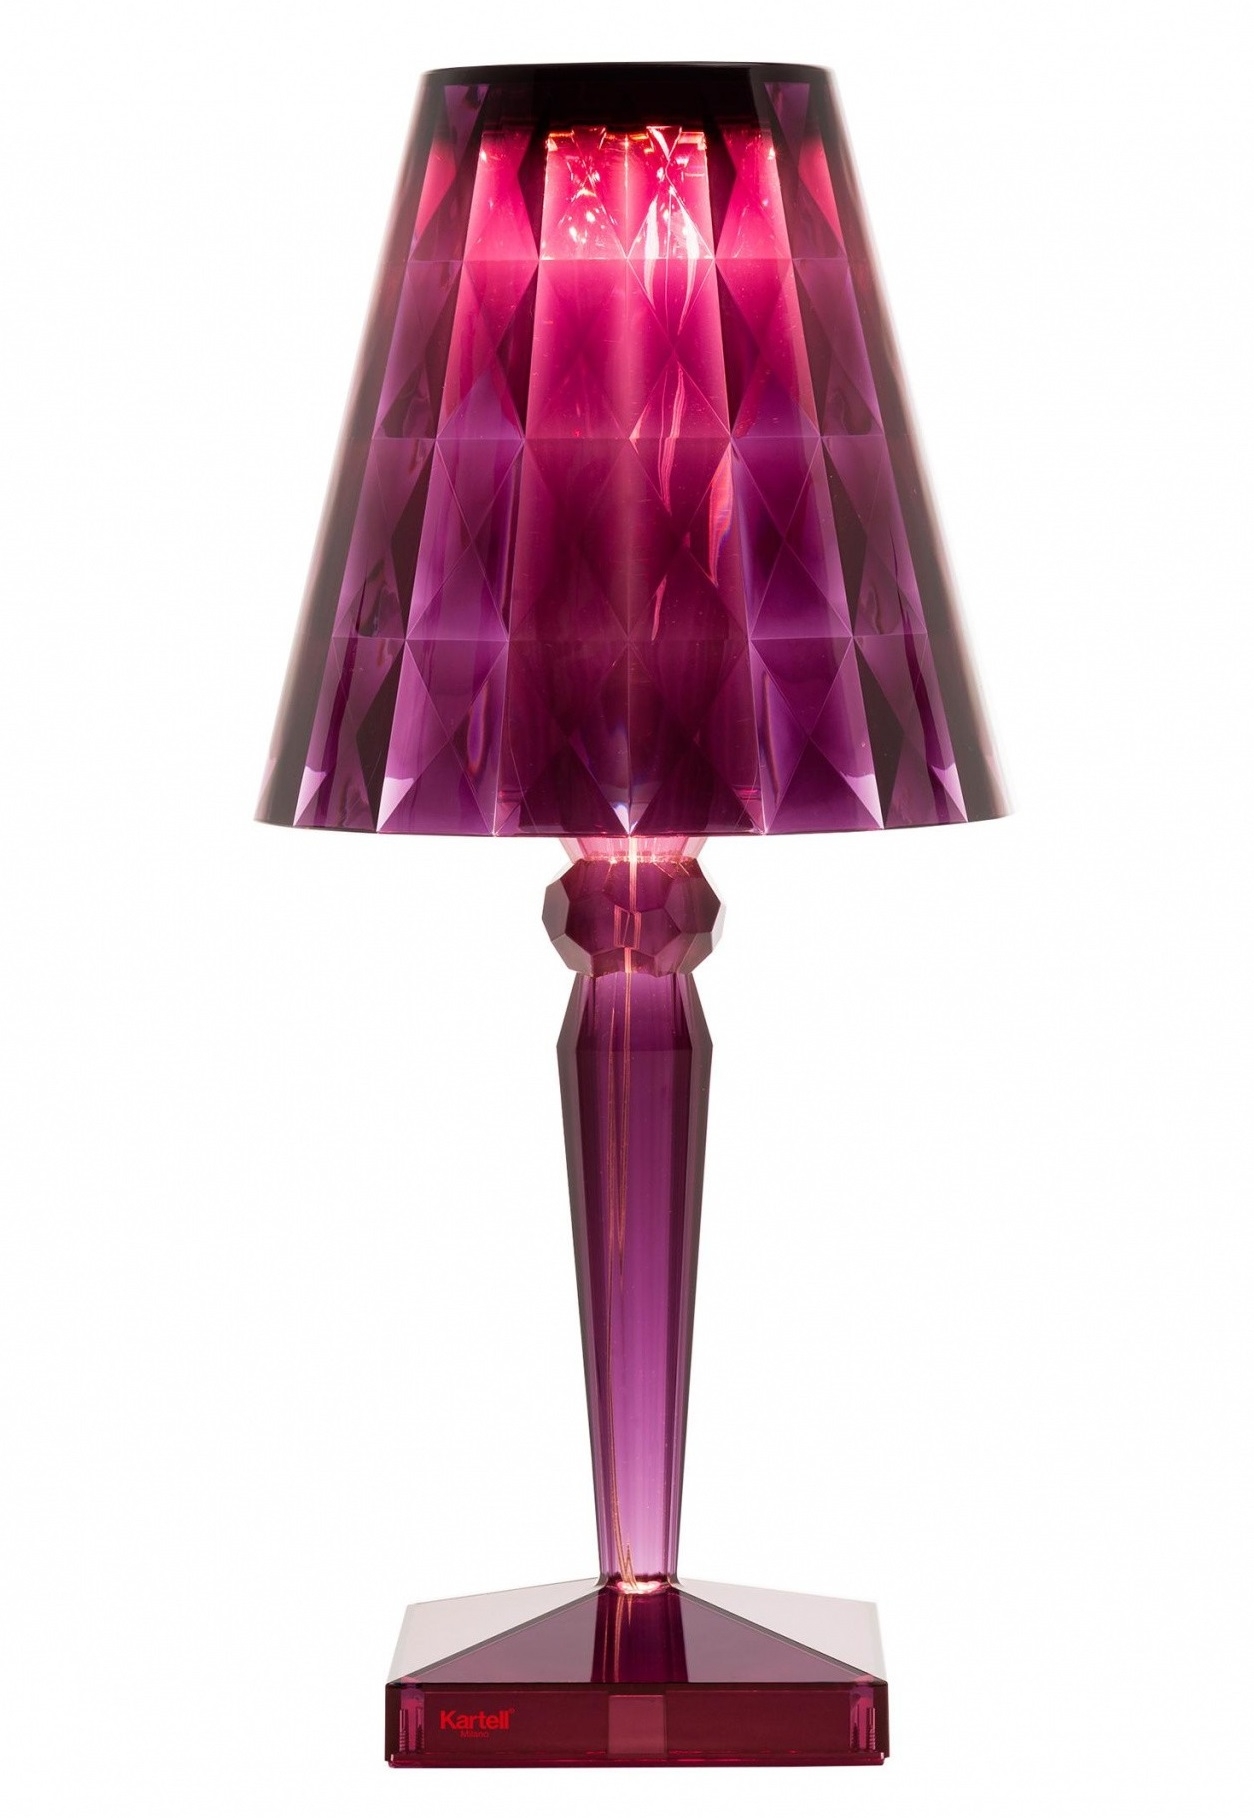 Veioza Kartell Big Battery design Ferruccio Laviani LED 3W h37.3cm violet pruna transparent Kartell